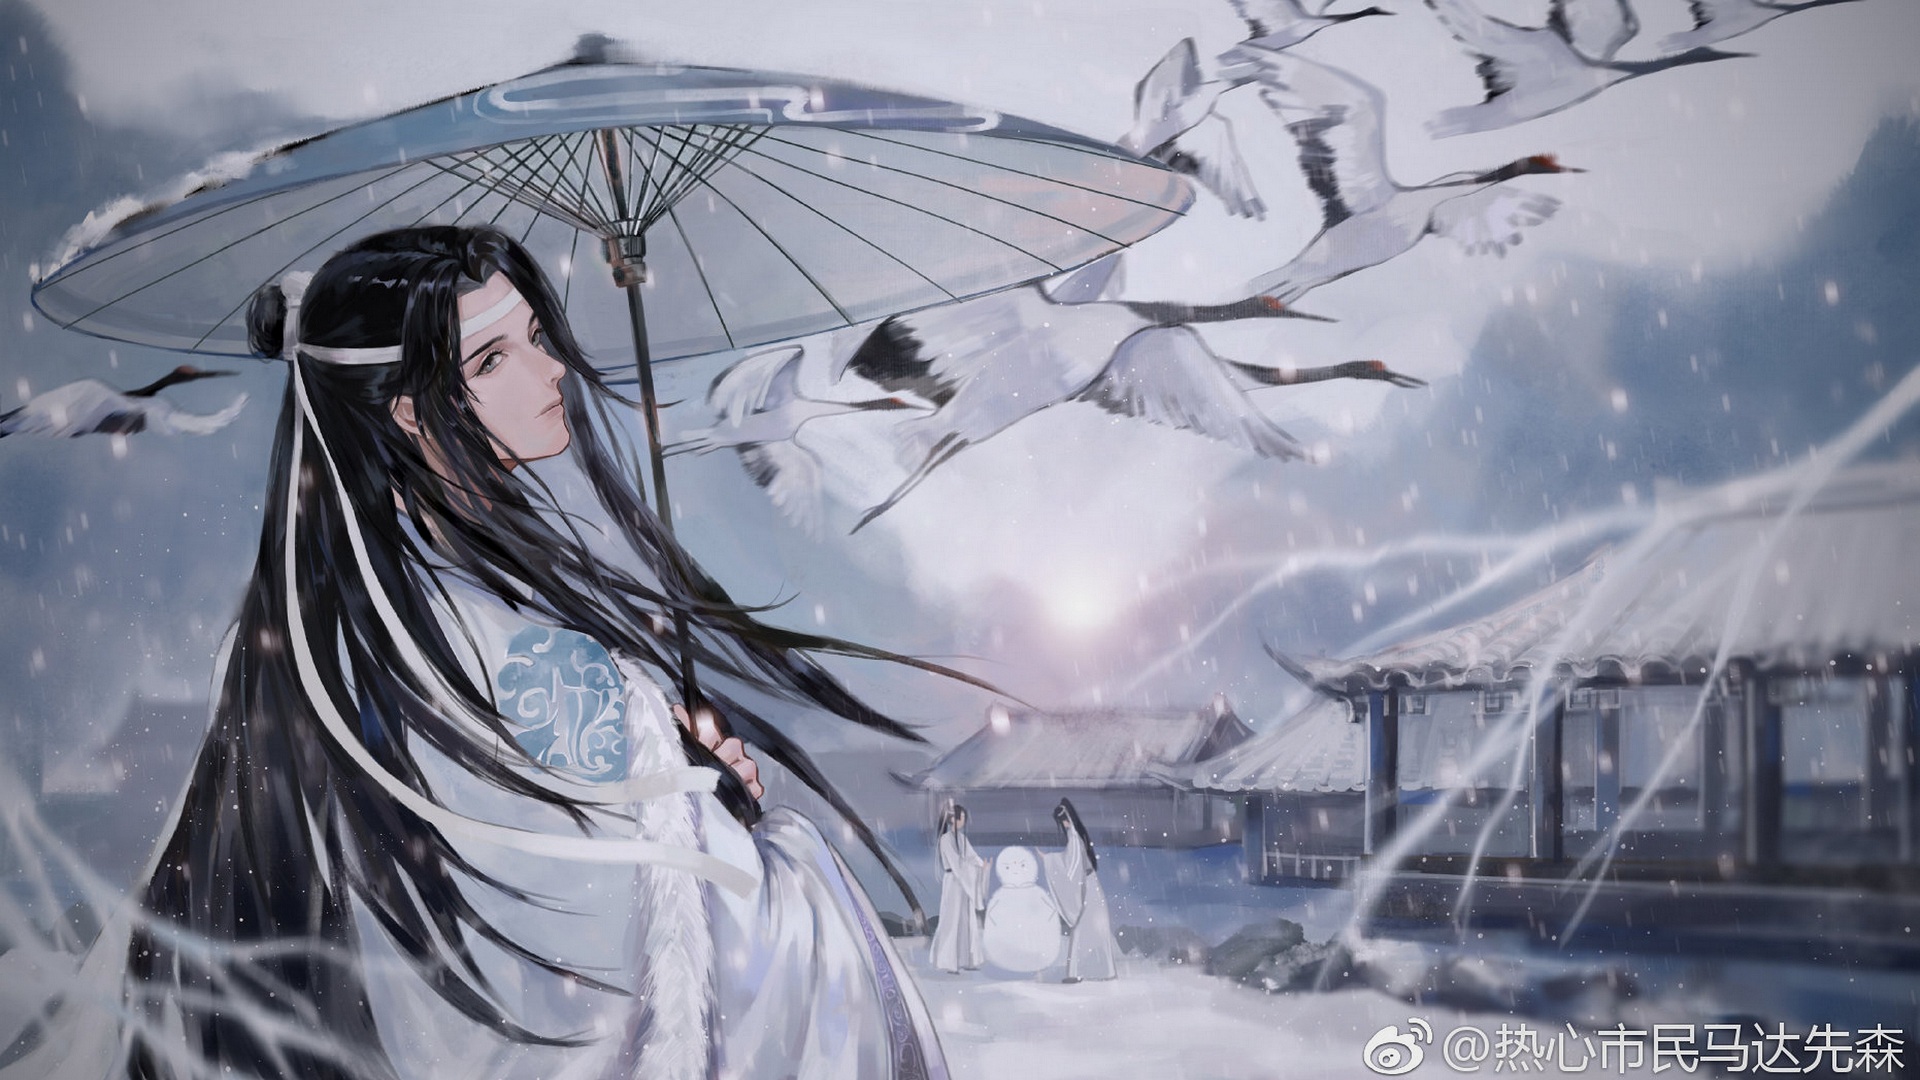 Anime Mo Dao Zu Shi Wallpaper - Resolution:1920x1080 - ID:1335455 